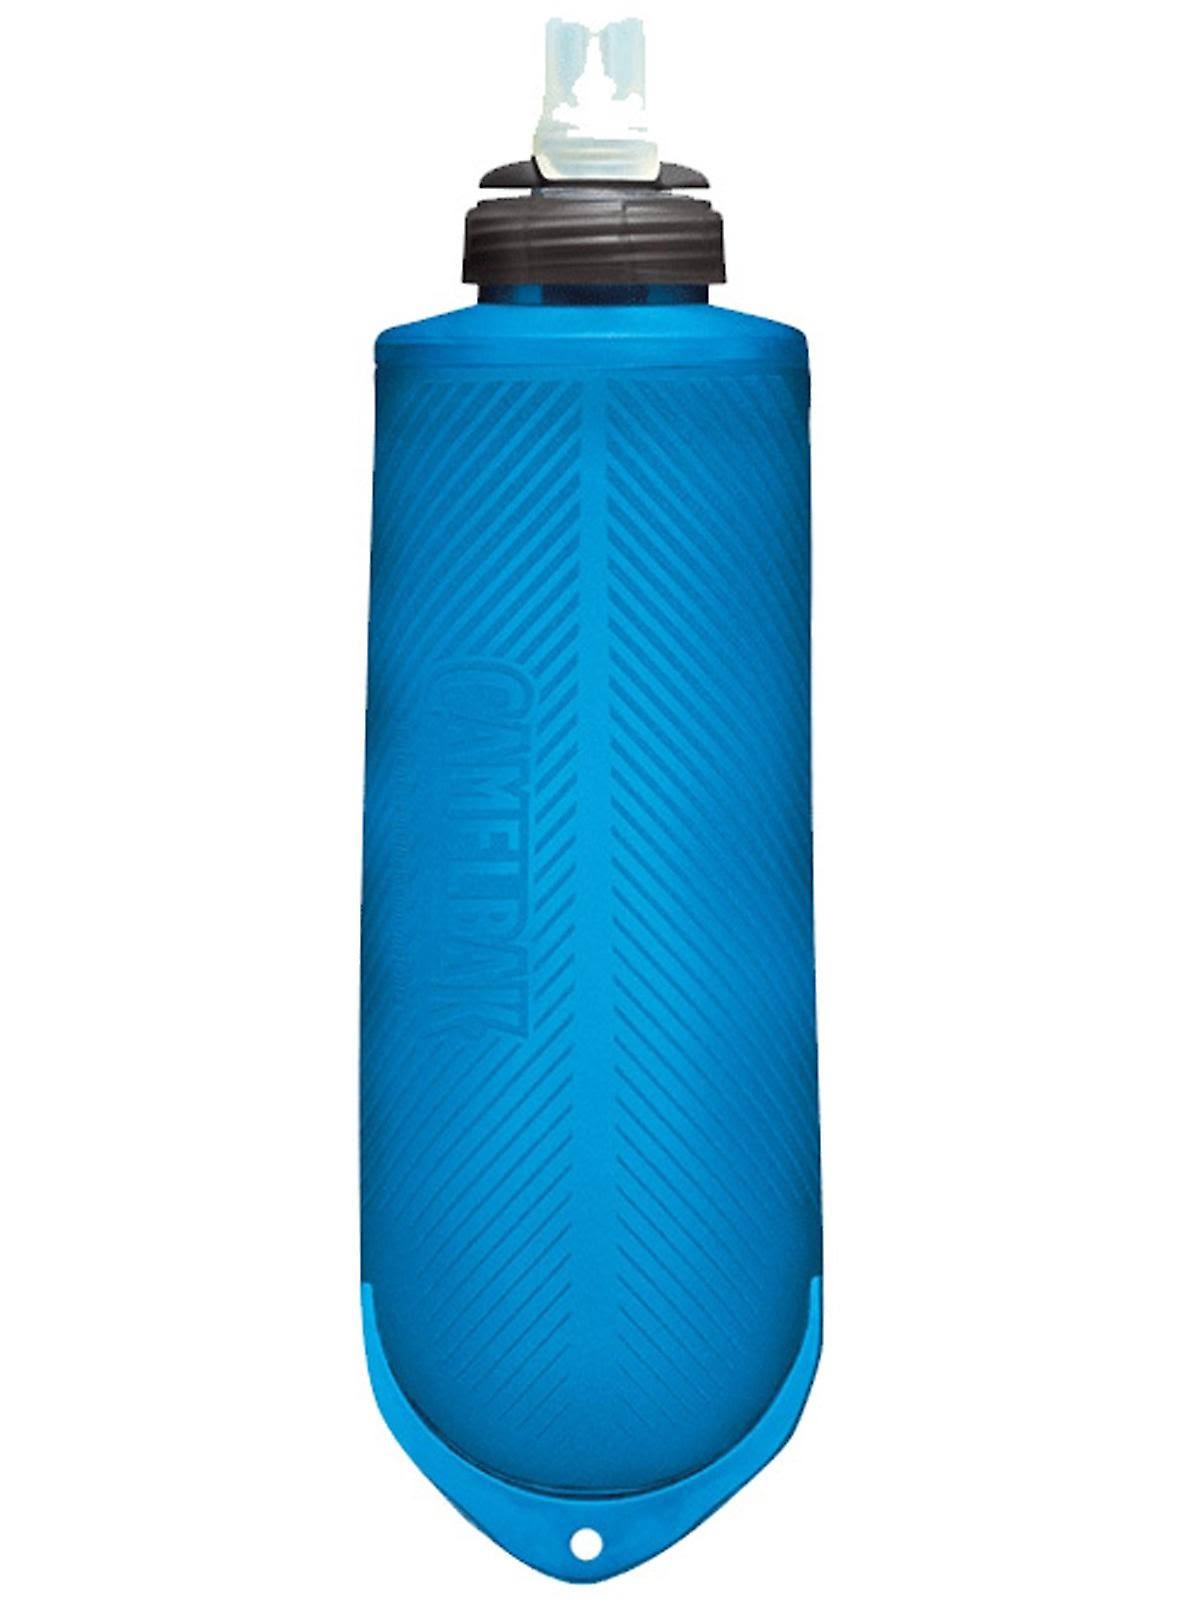 CamelBak Quick Stow Flask Drinking Bottles - Blue, 355ml